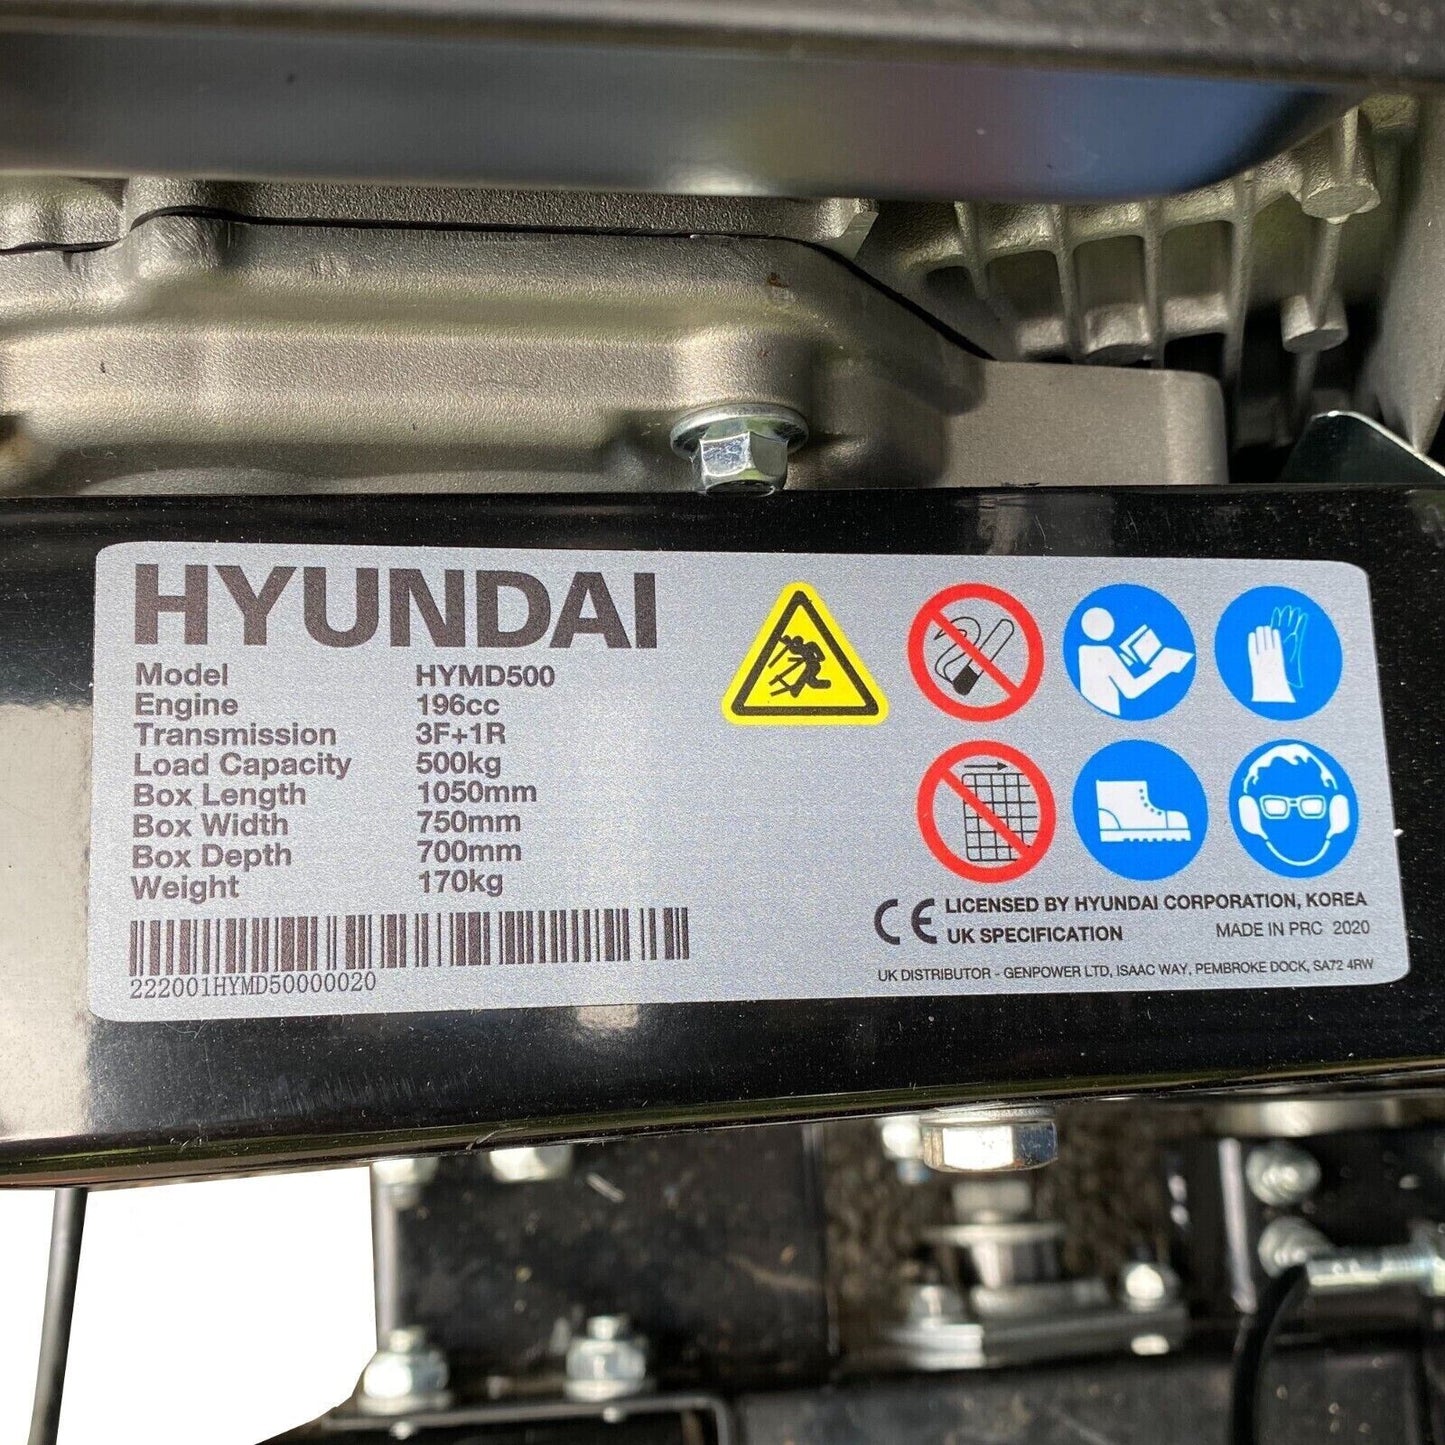 Hyundai HYMD500 196cc Petrol 500kg Payload Mini Dumper - Brand New